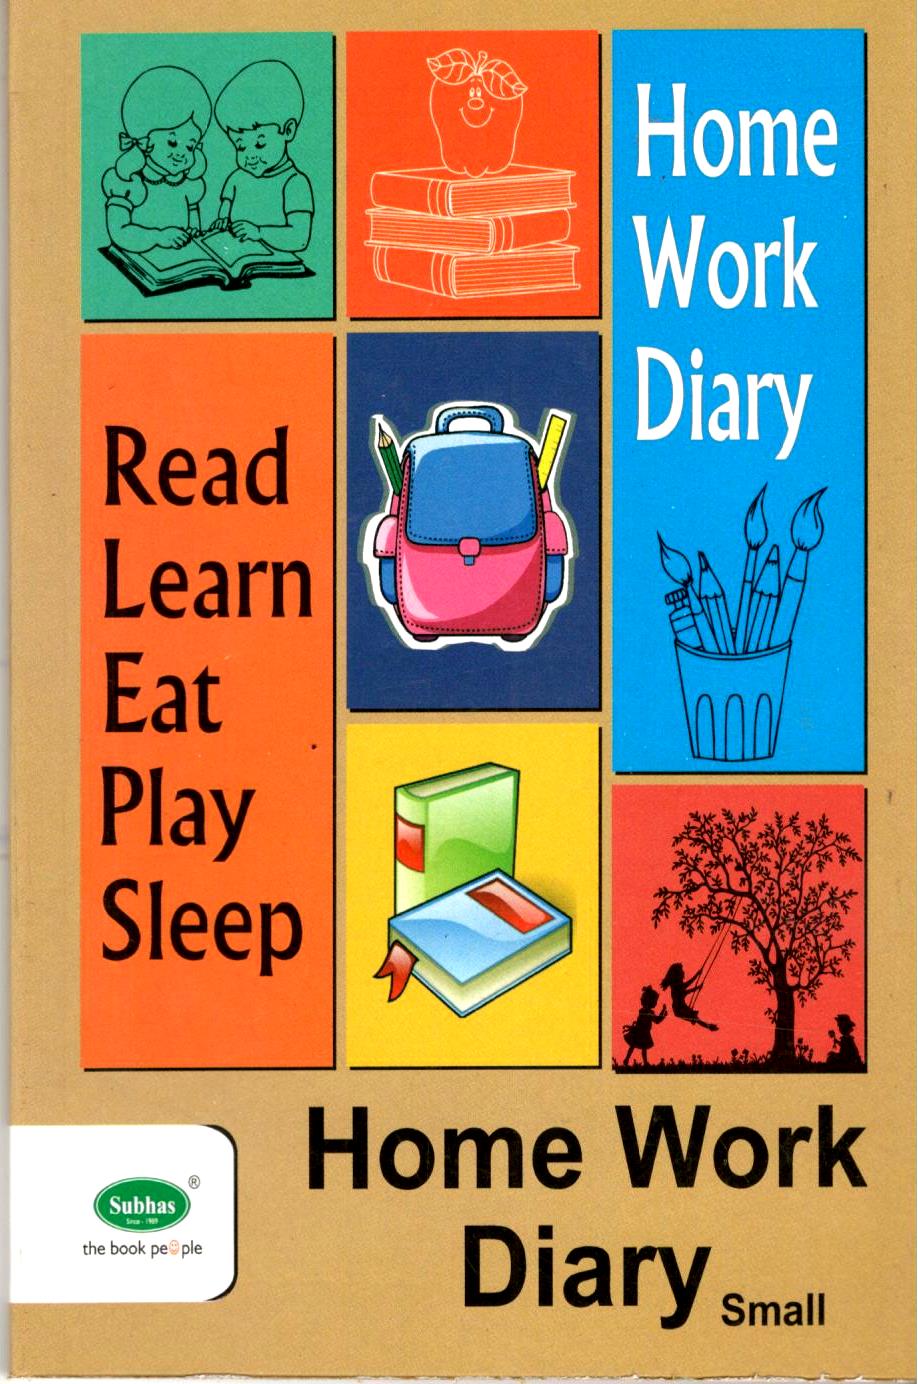 Subhas Home Work Diary Small